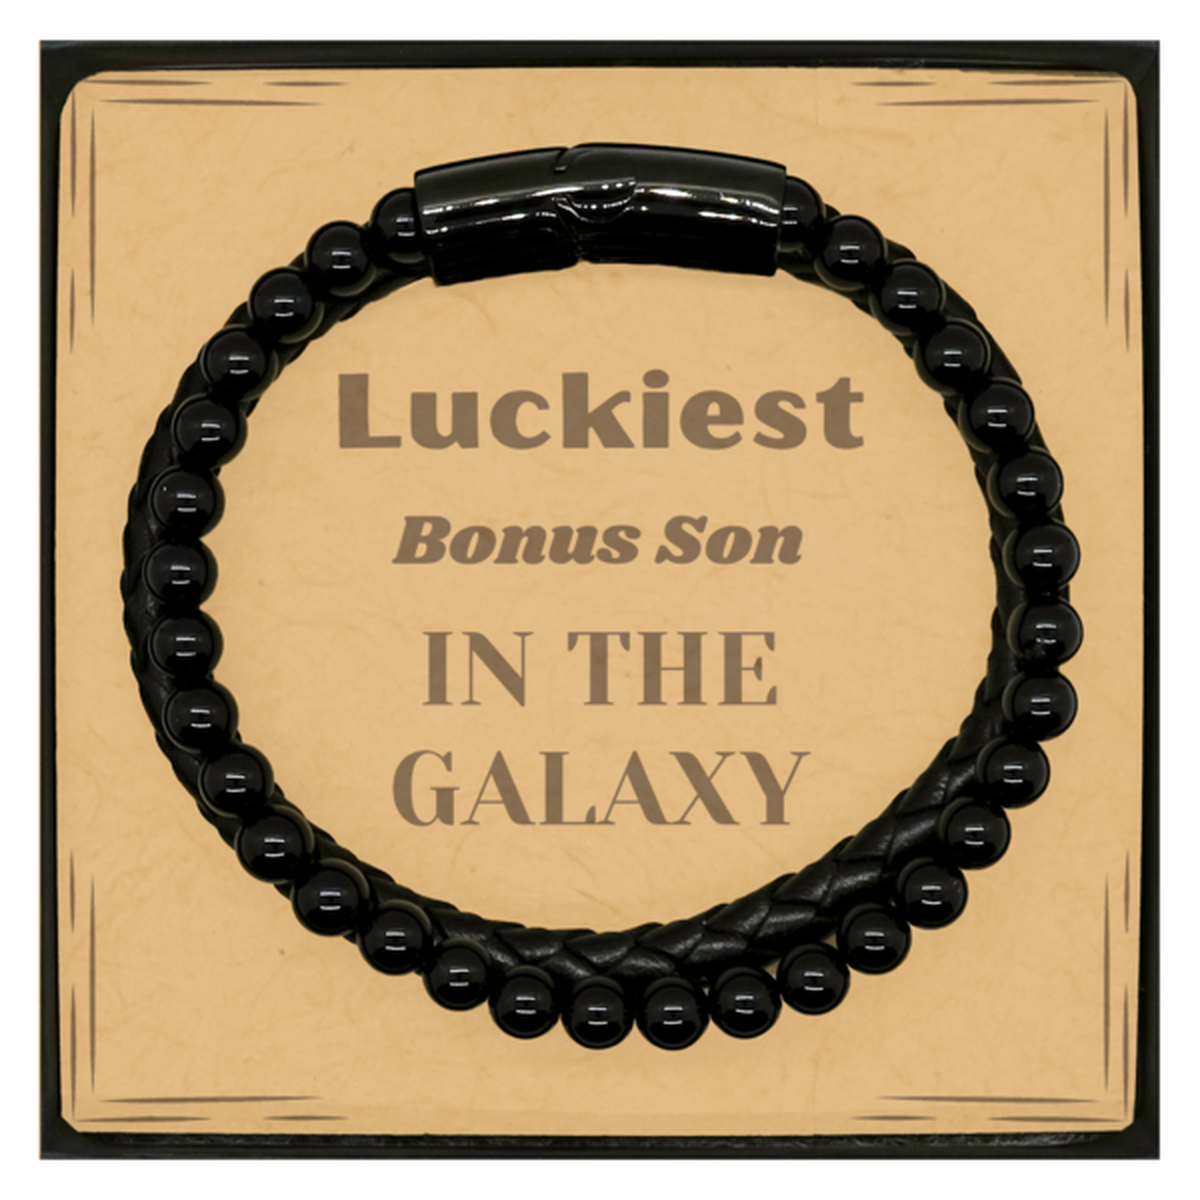 Luckiest Bonus Son in the Galaxy, To My Bonus Son Message Card Gifts, Christmas Bonus Son Stone Leather Bracelets Gifts, X-mas Birthday Unique Gifts For Bonus Son Men Women